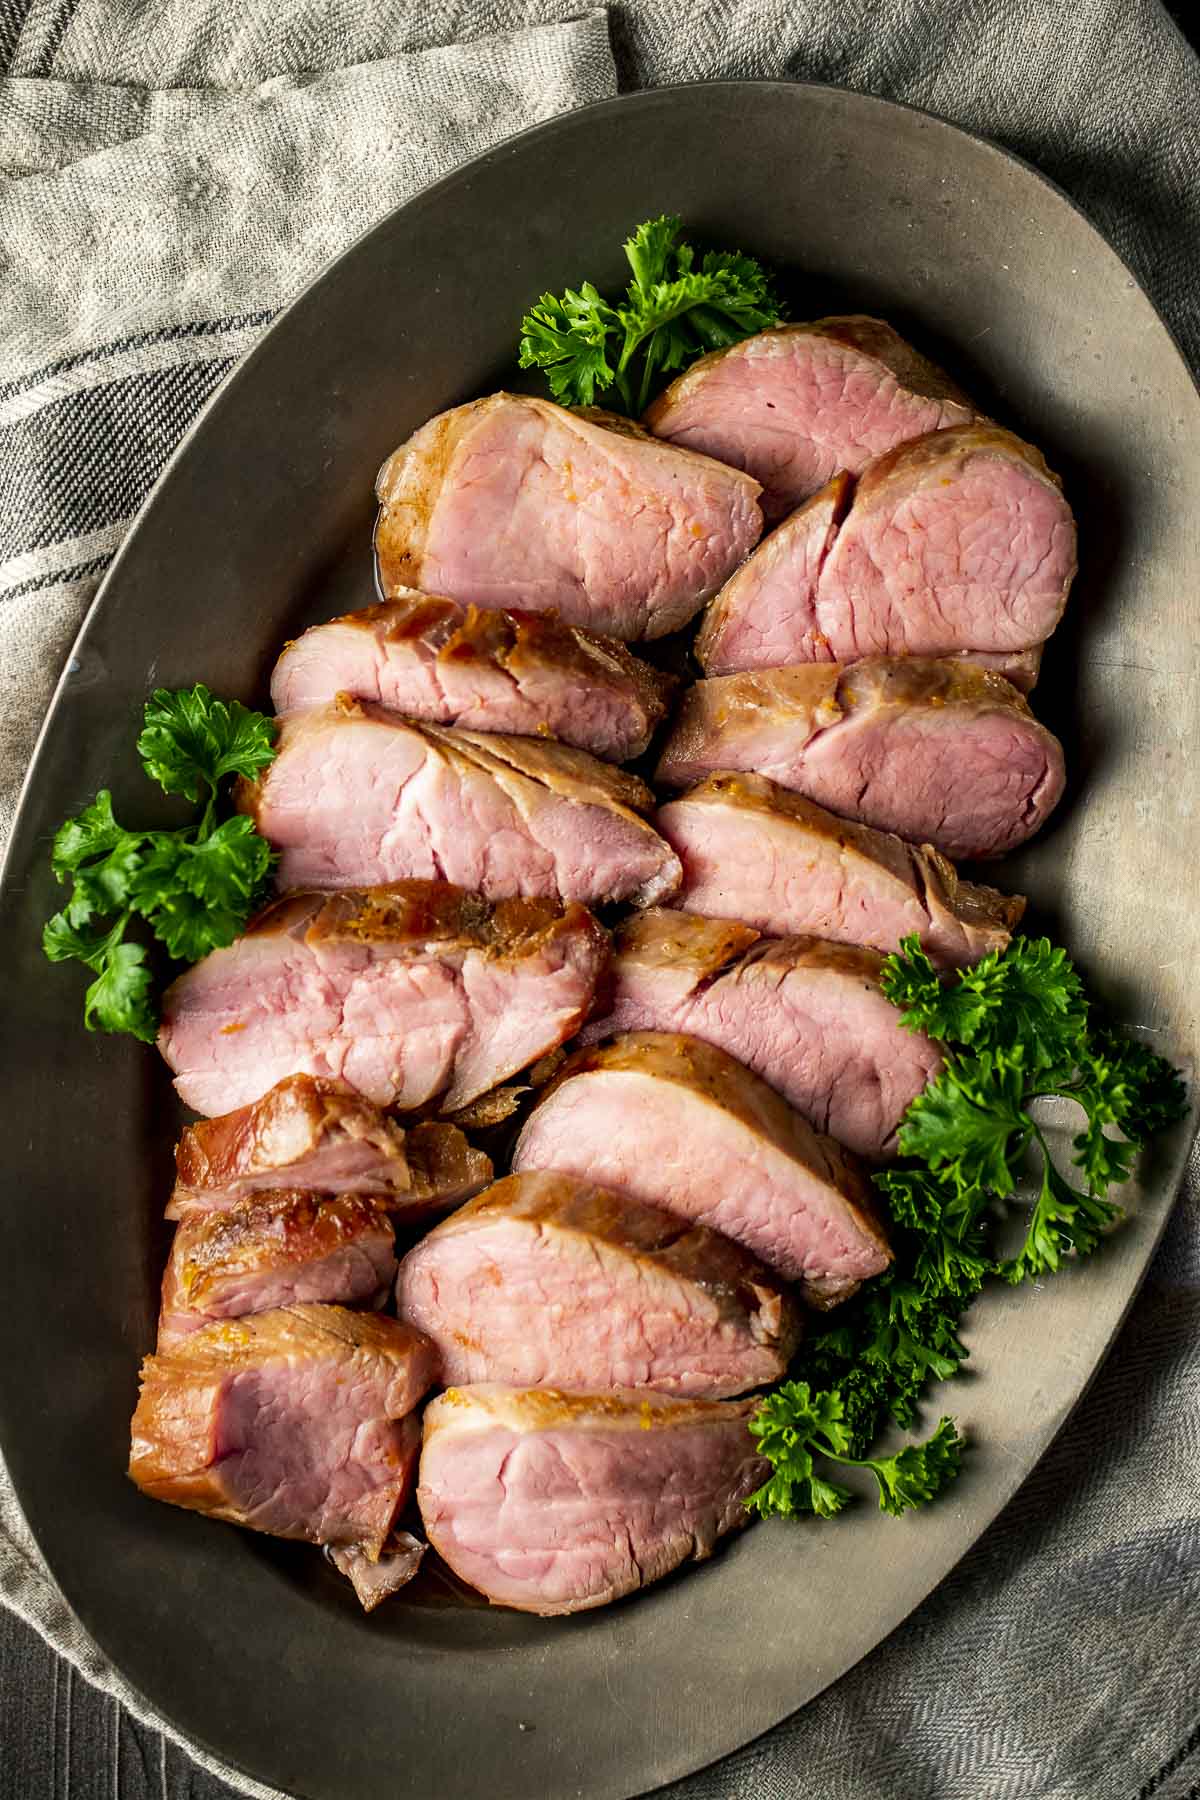 Pork tenderloin slices arranged on a platter with a herb garnish.